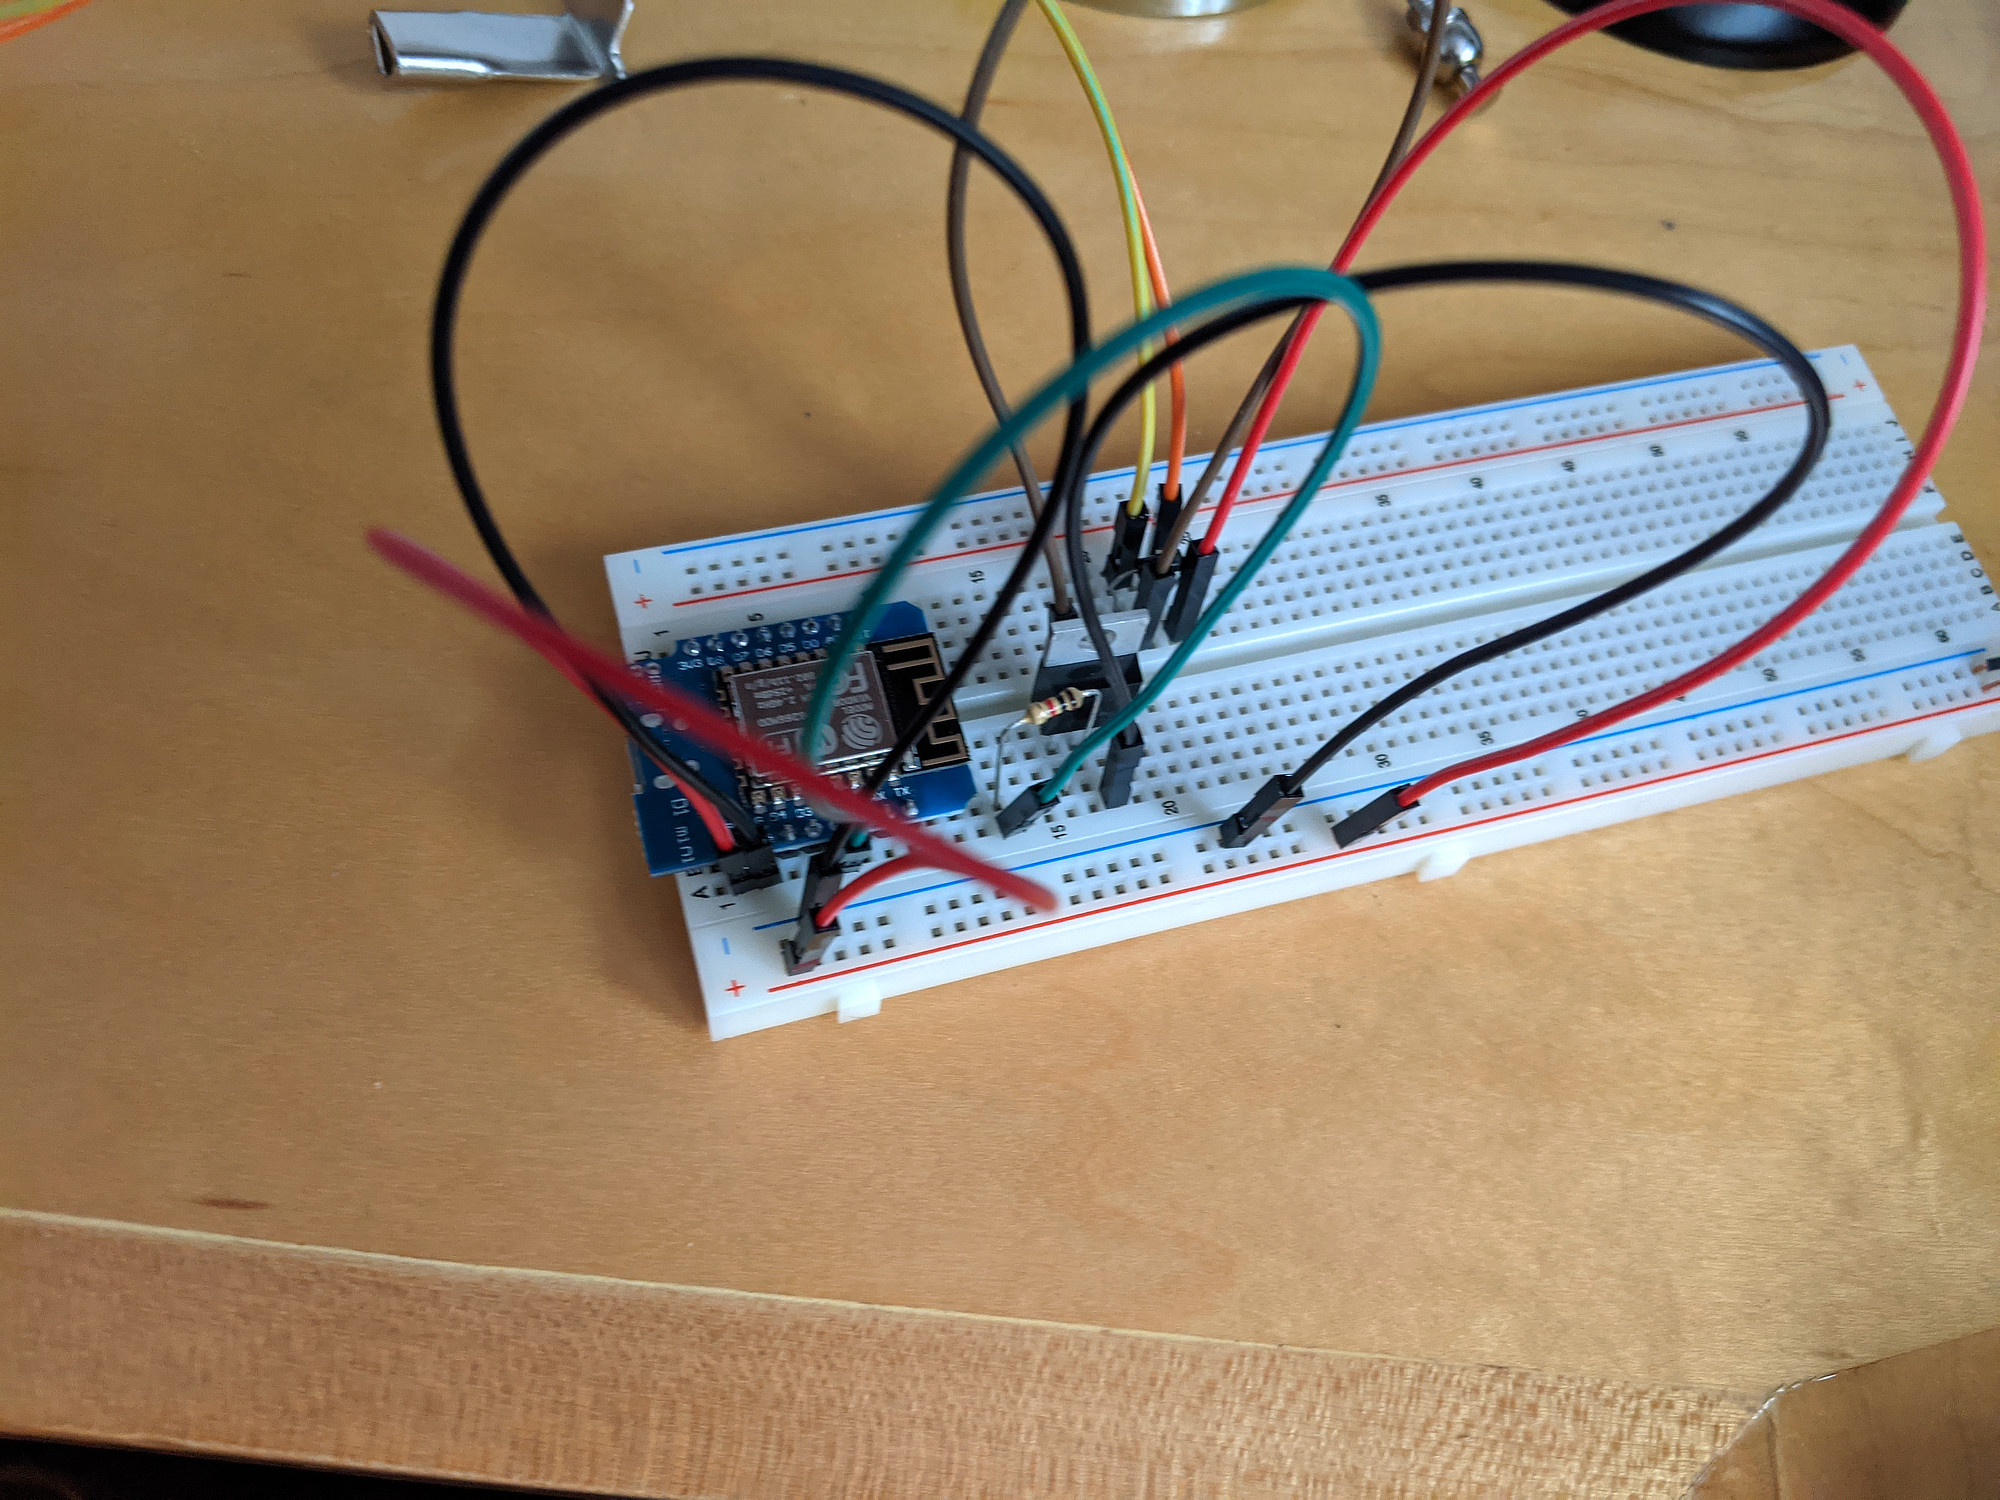 Testing the circuit on a breadboard